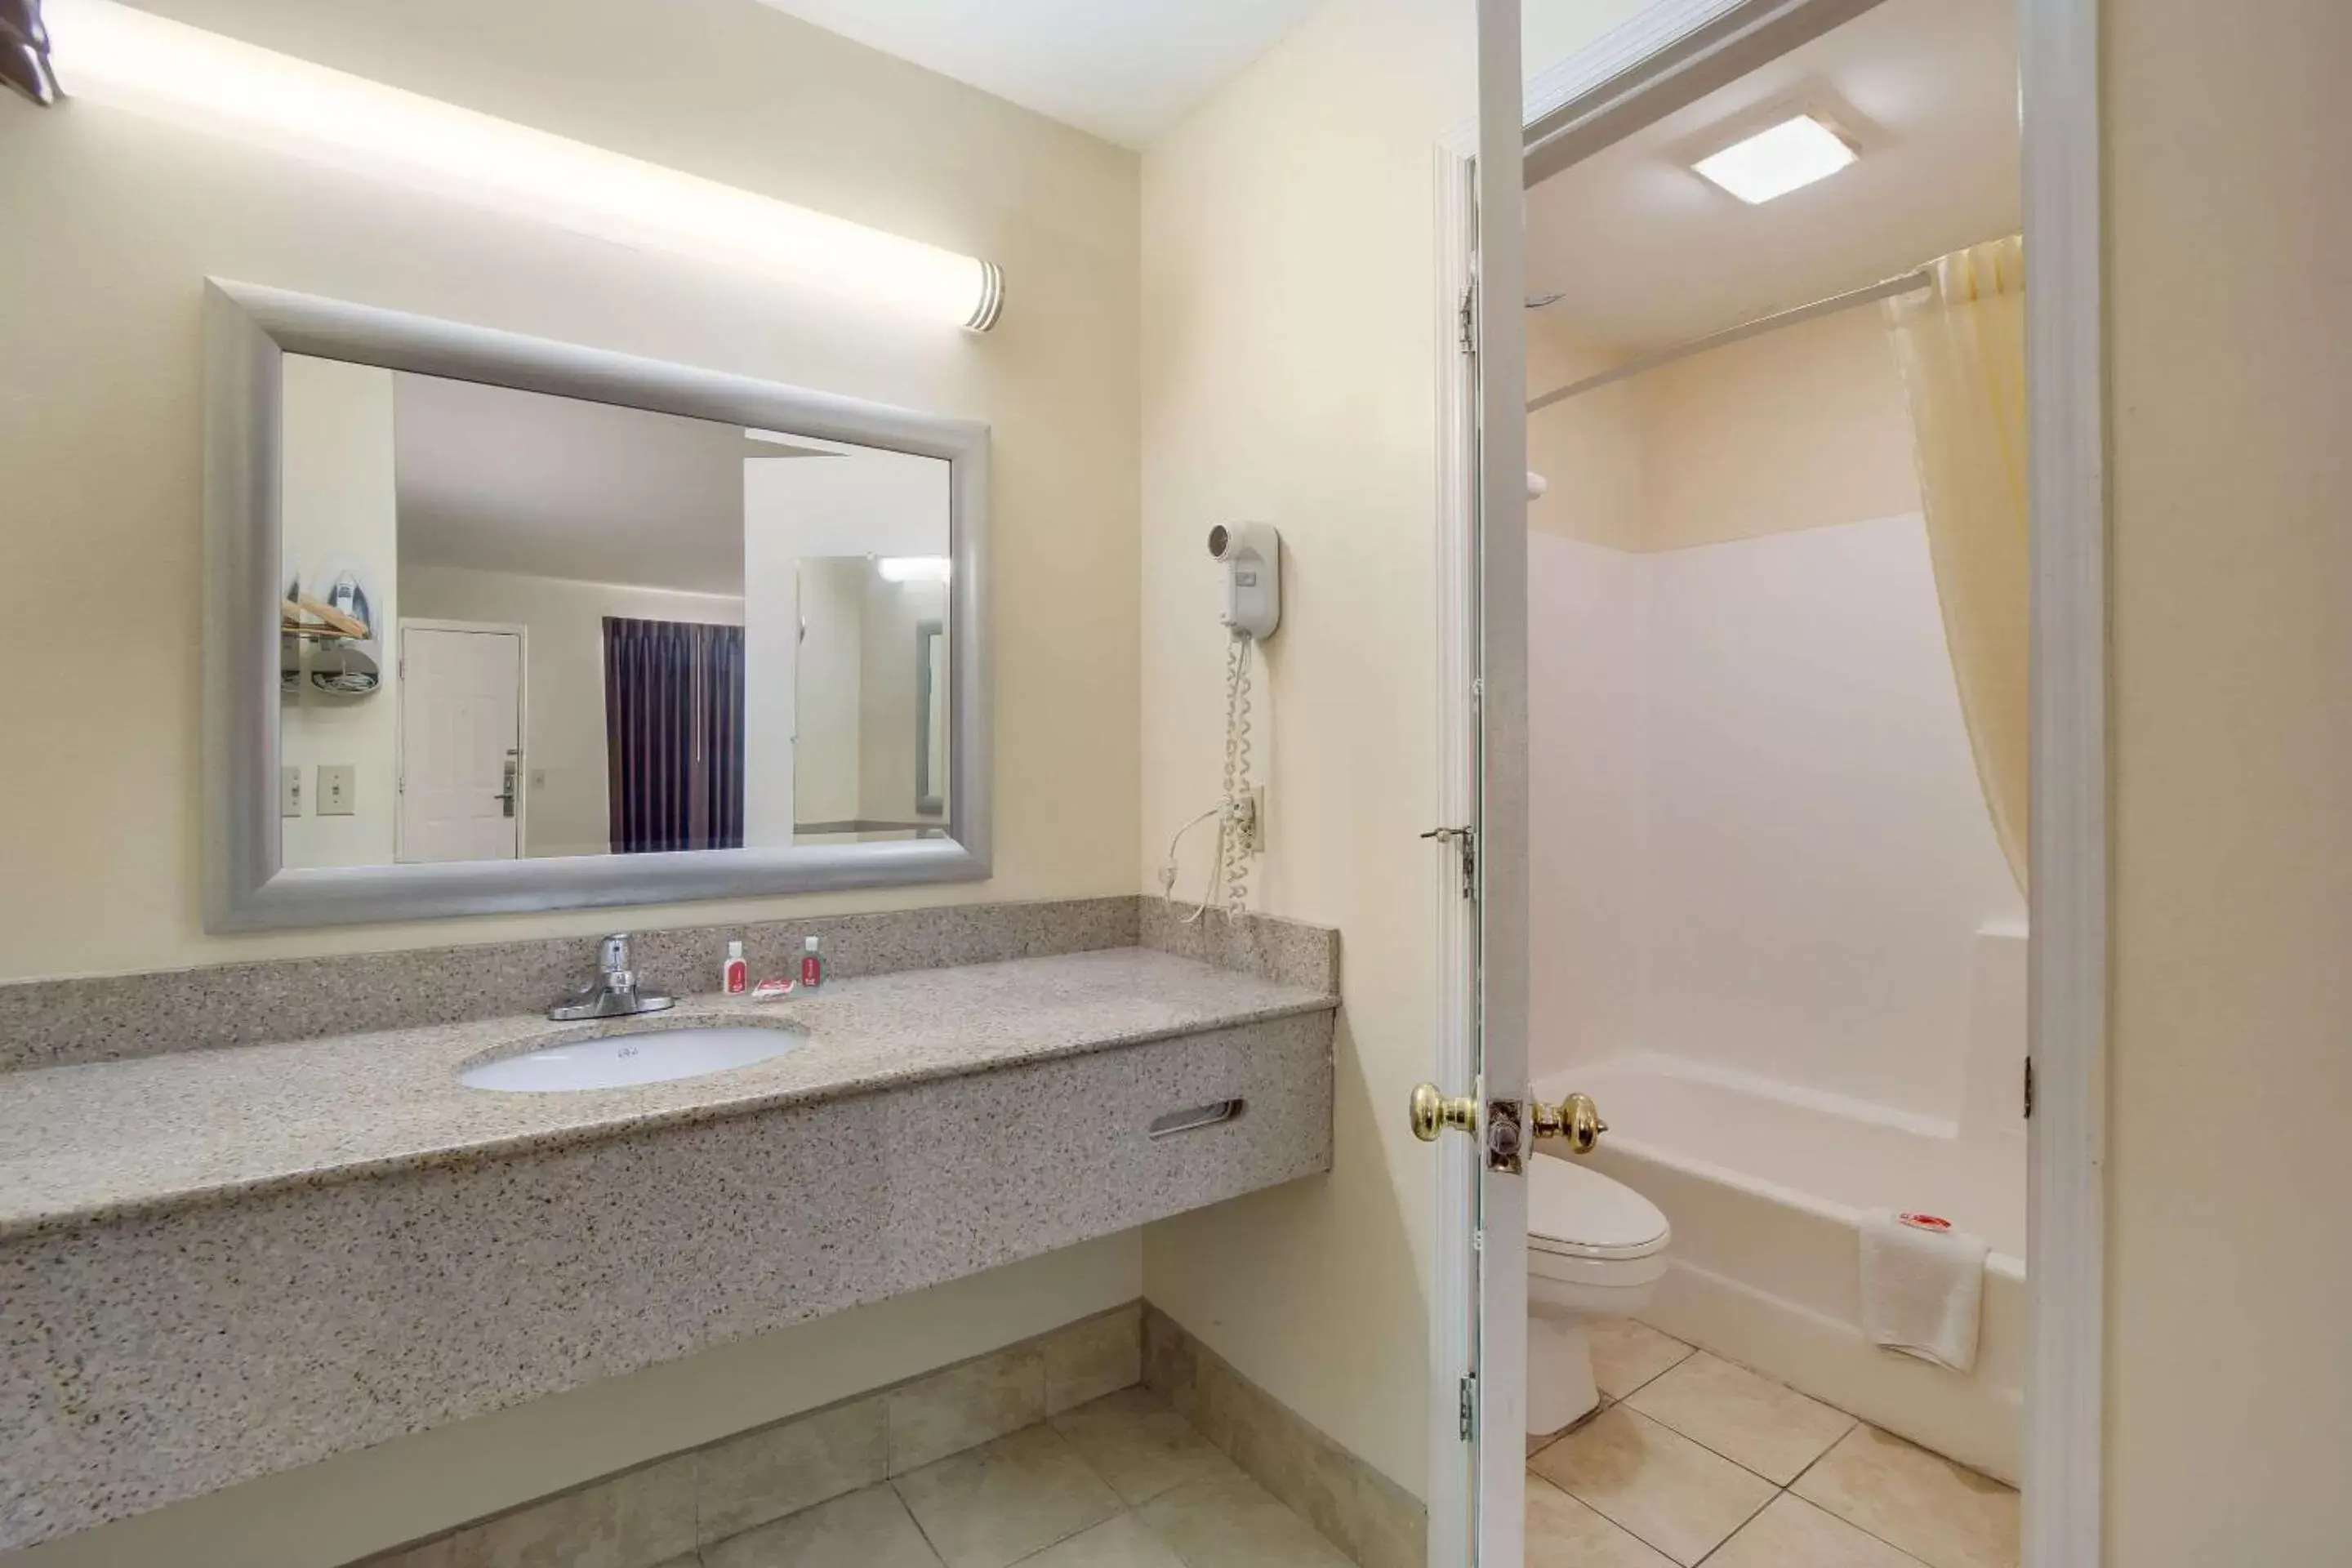 Photo of the whole room, Bathroom in Econo Lodge Santee